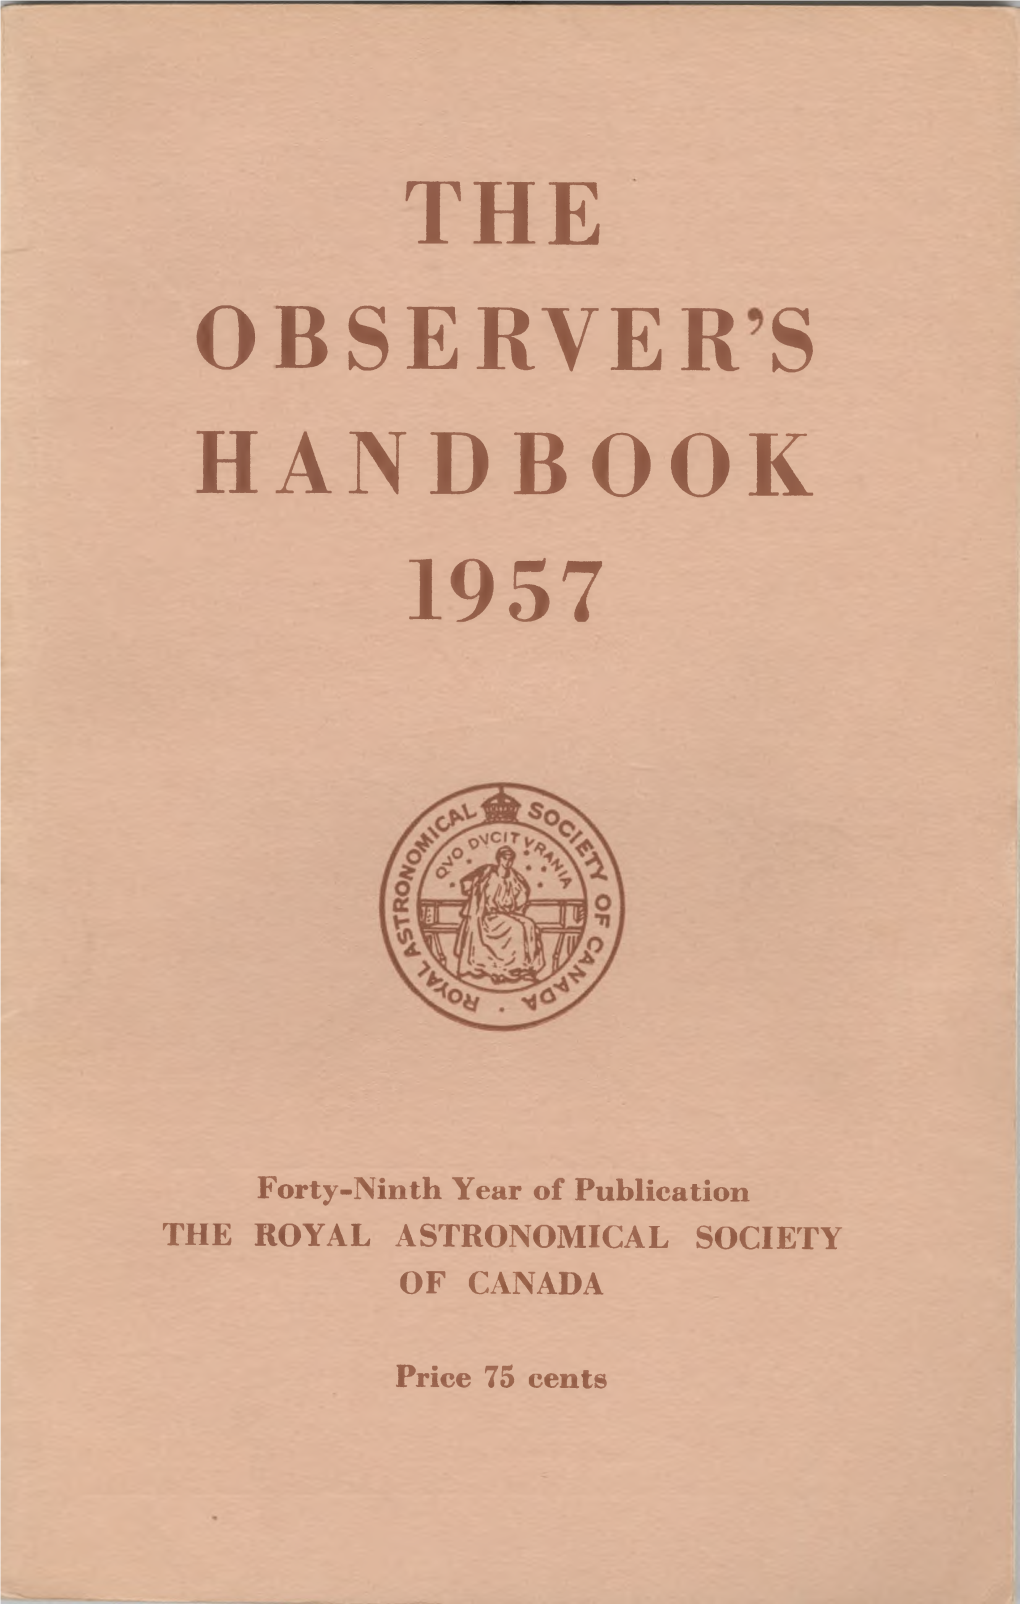 The Observer's Handbook 1957